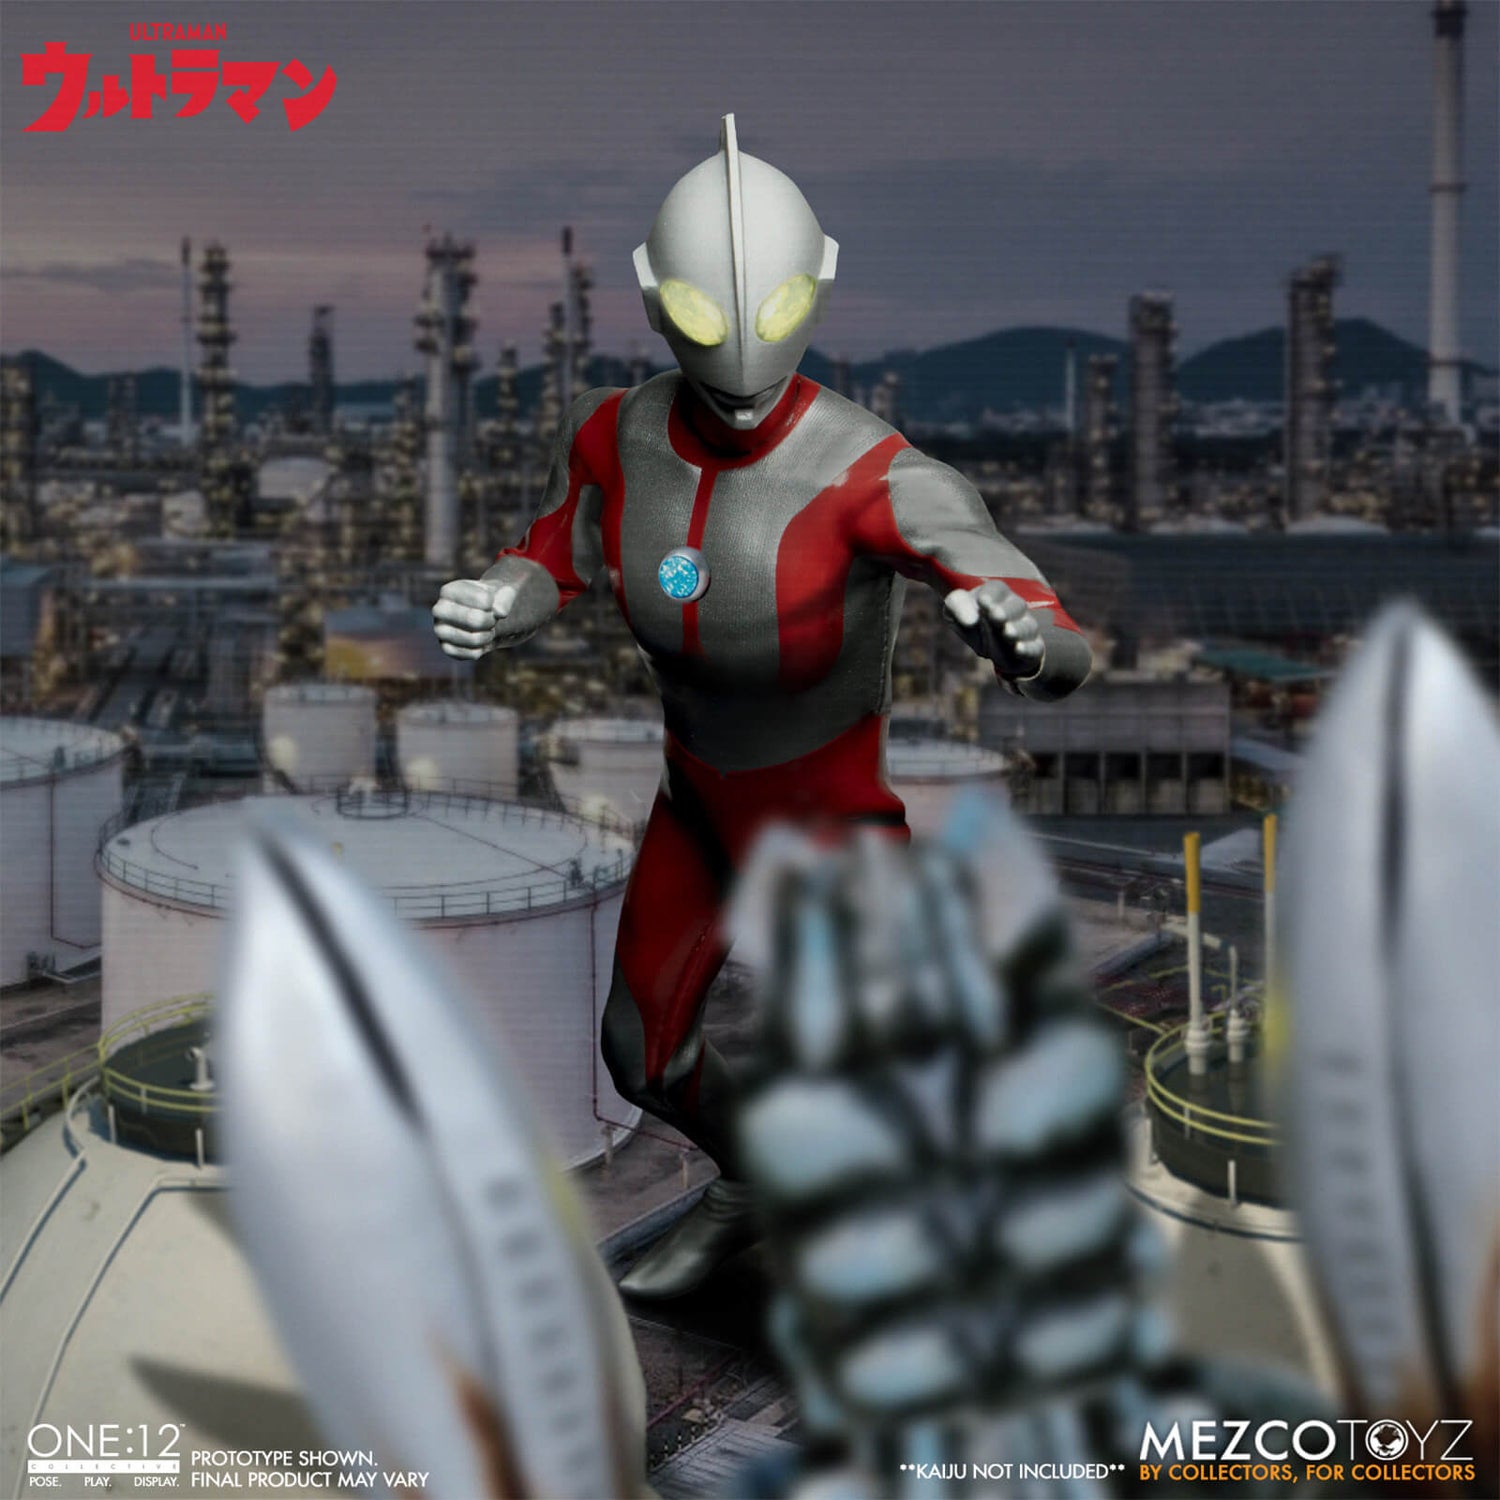 Mezco One:12 kollektive Ultraman Actionfigur